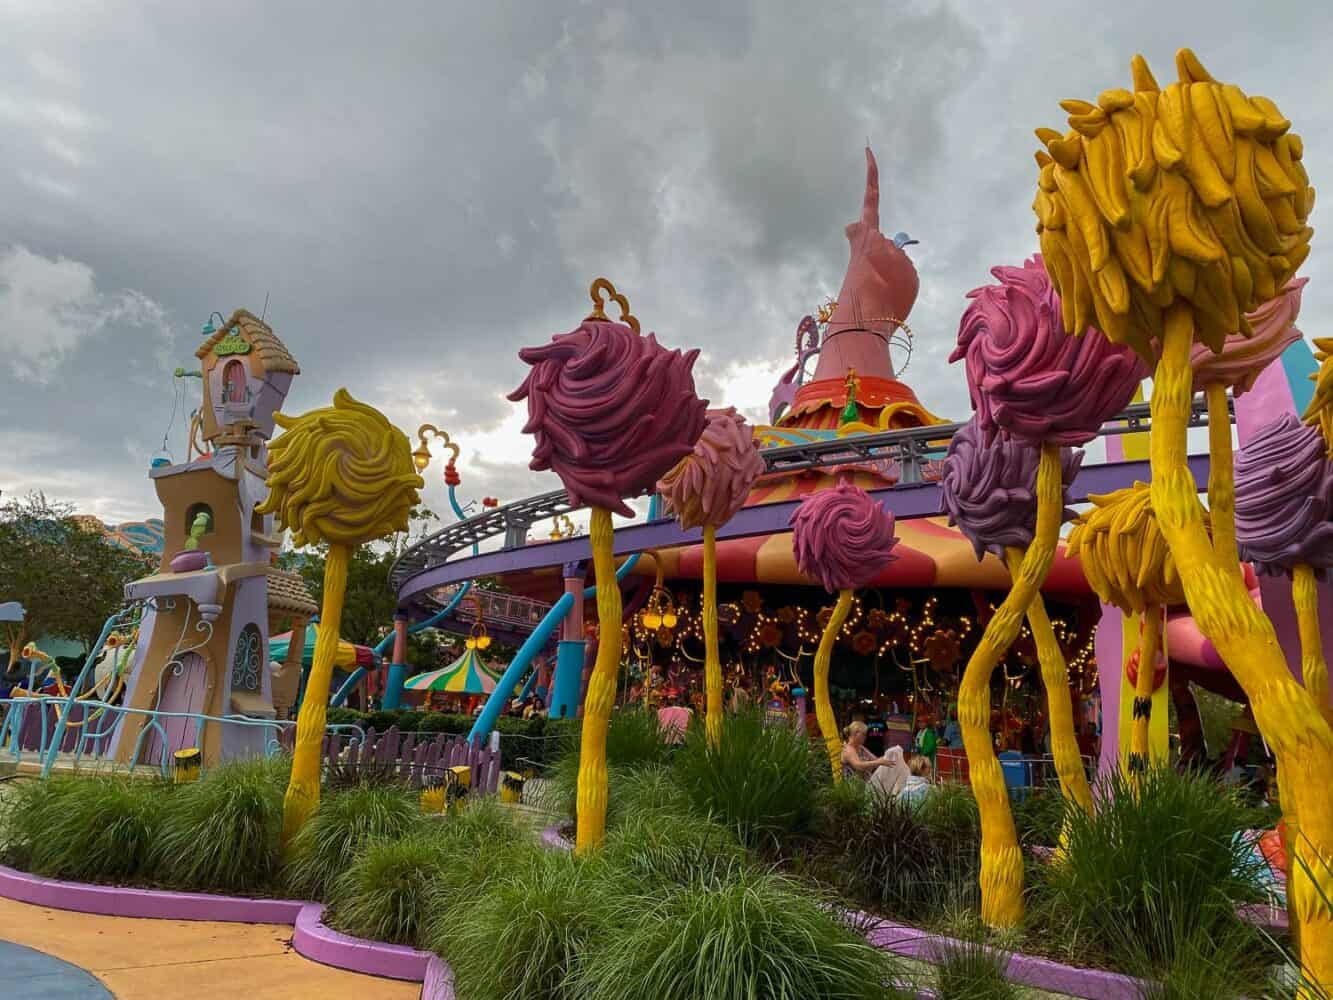 Seuss Landing, Islands of Adventure, Universal Orlando, Florida, USA